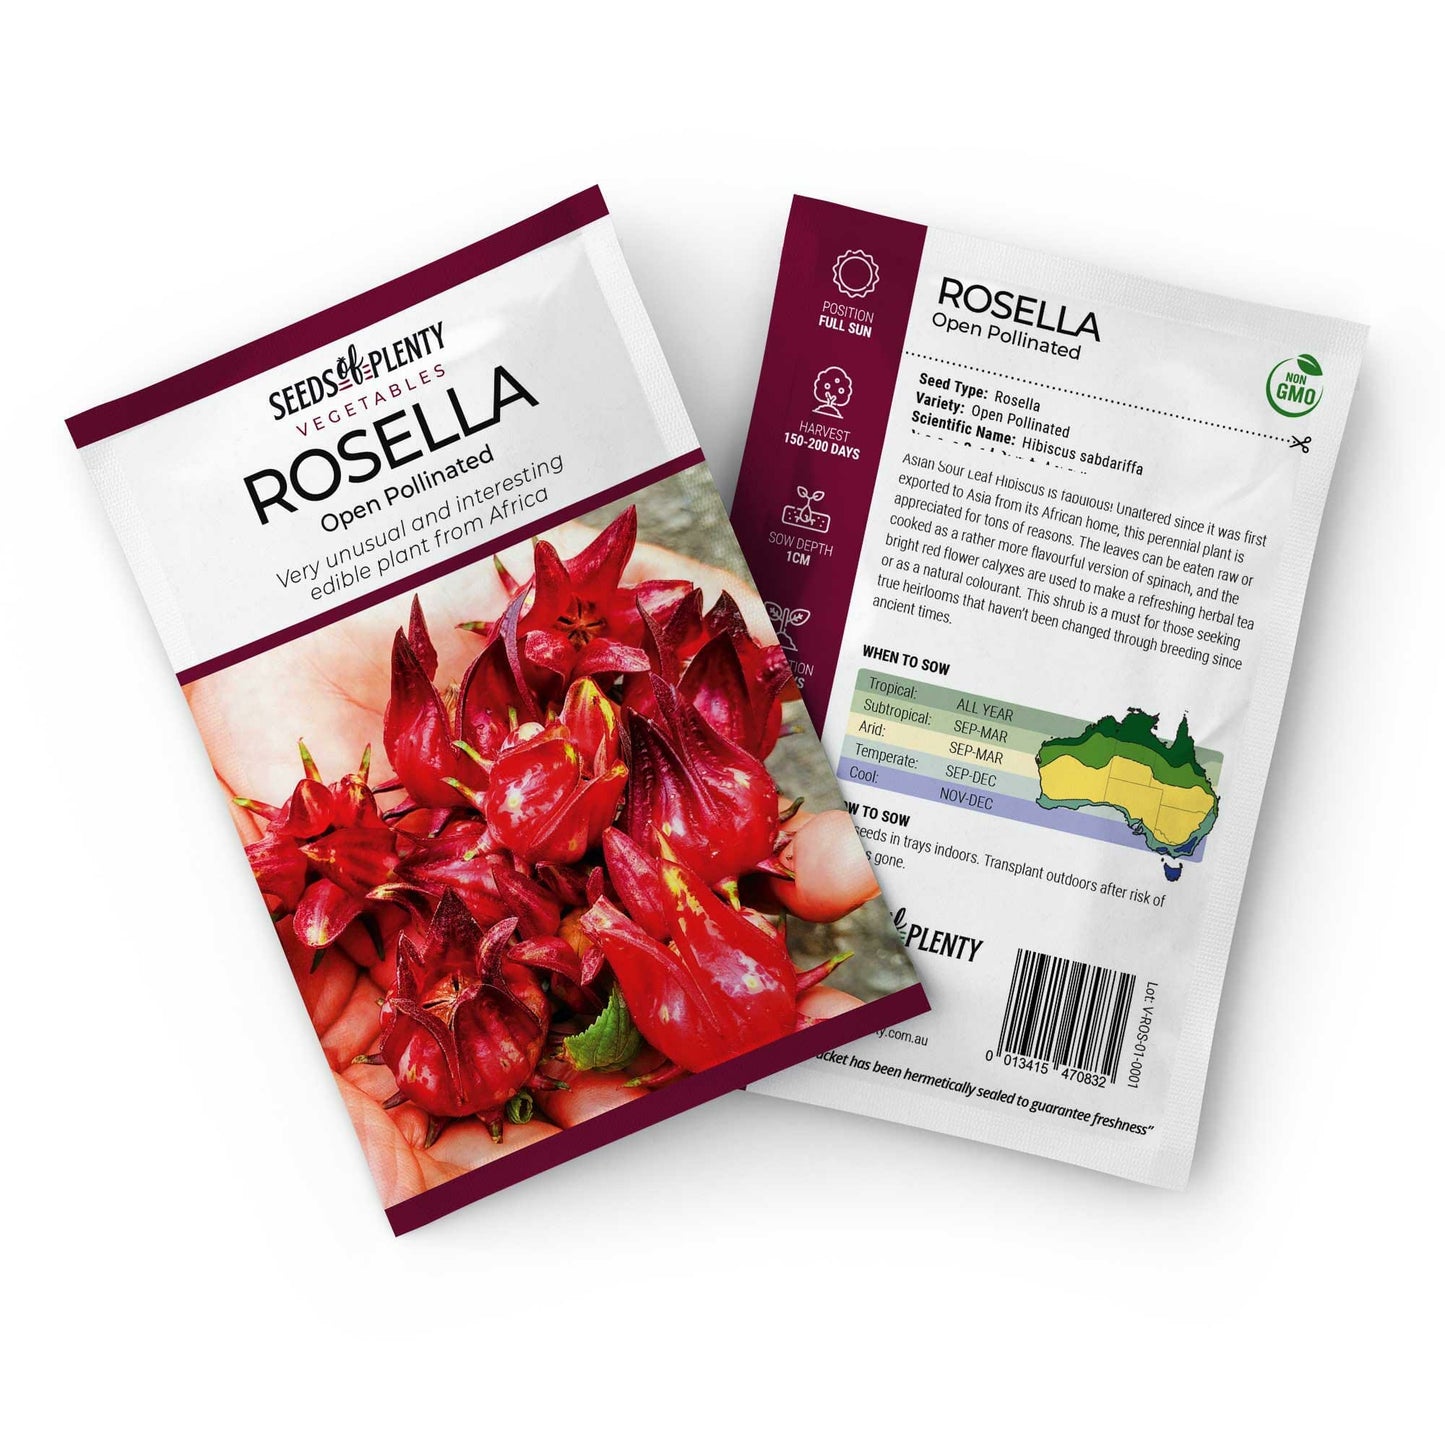 ROSELLA - Open Pollinated